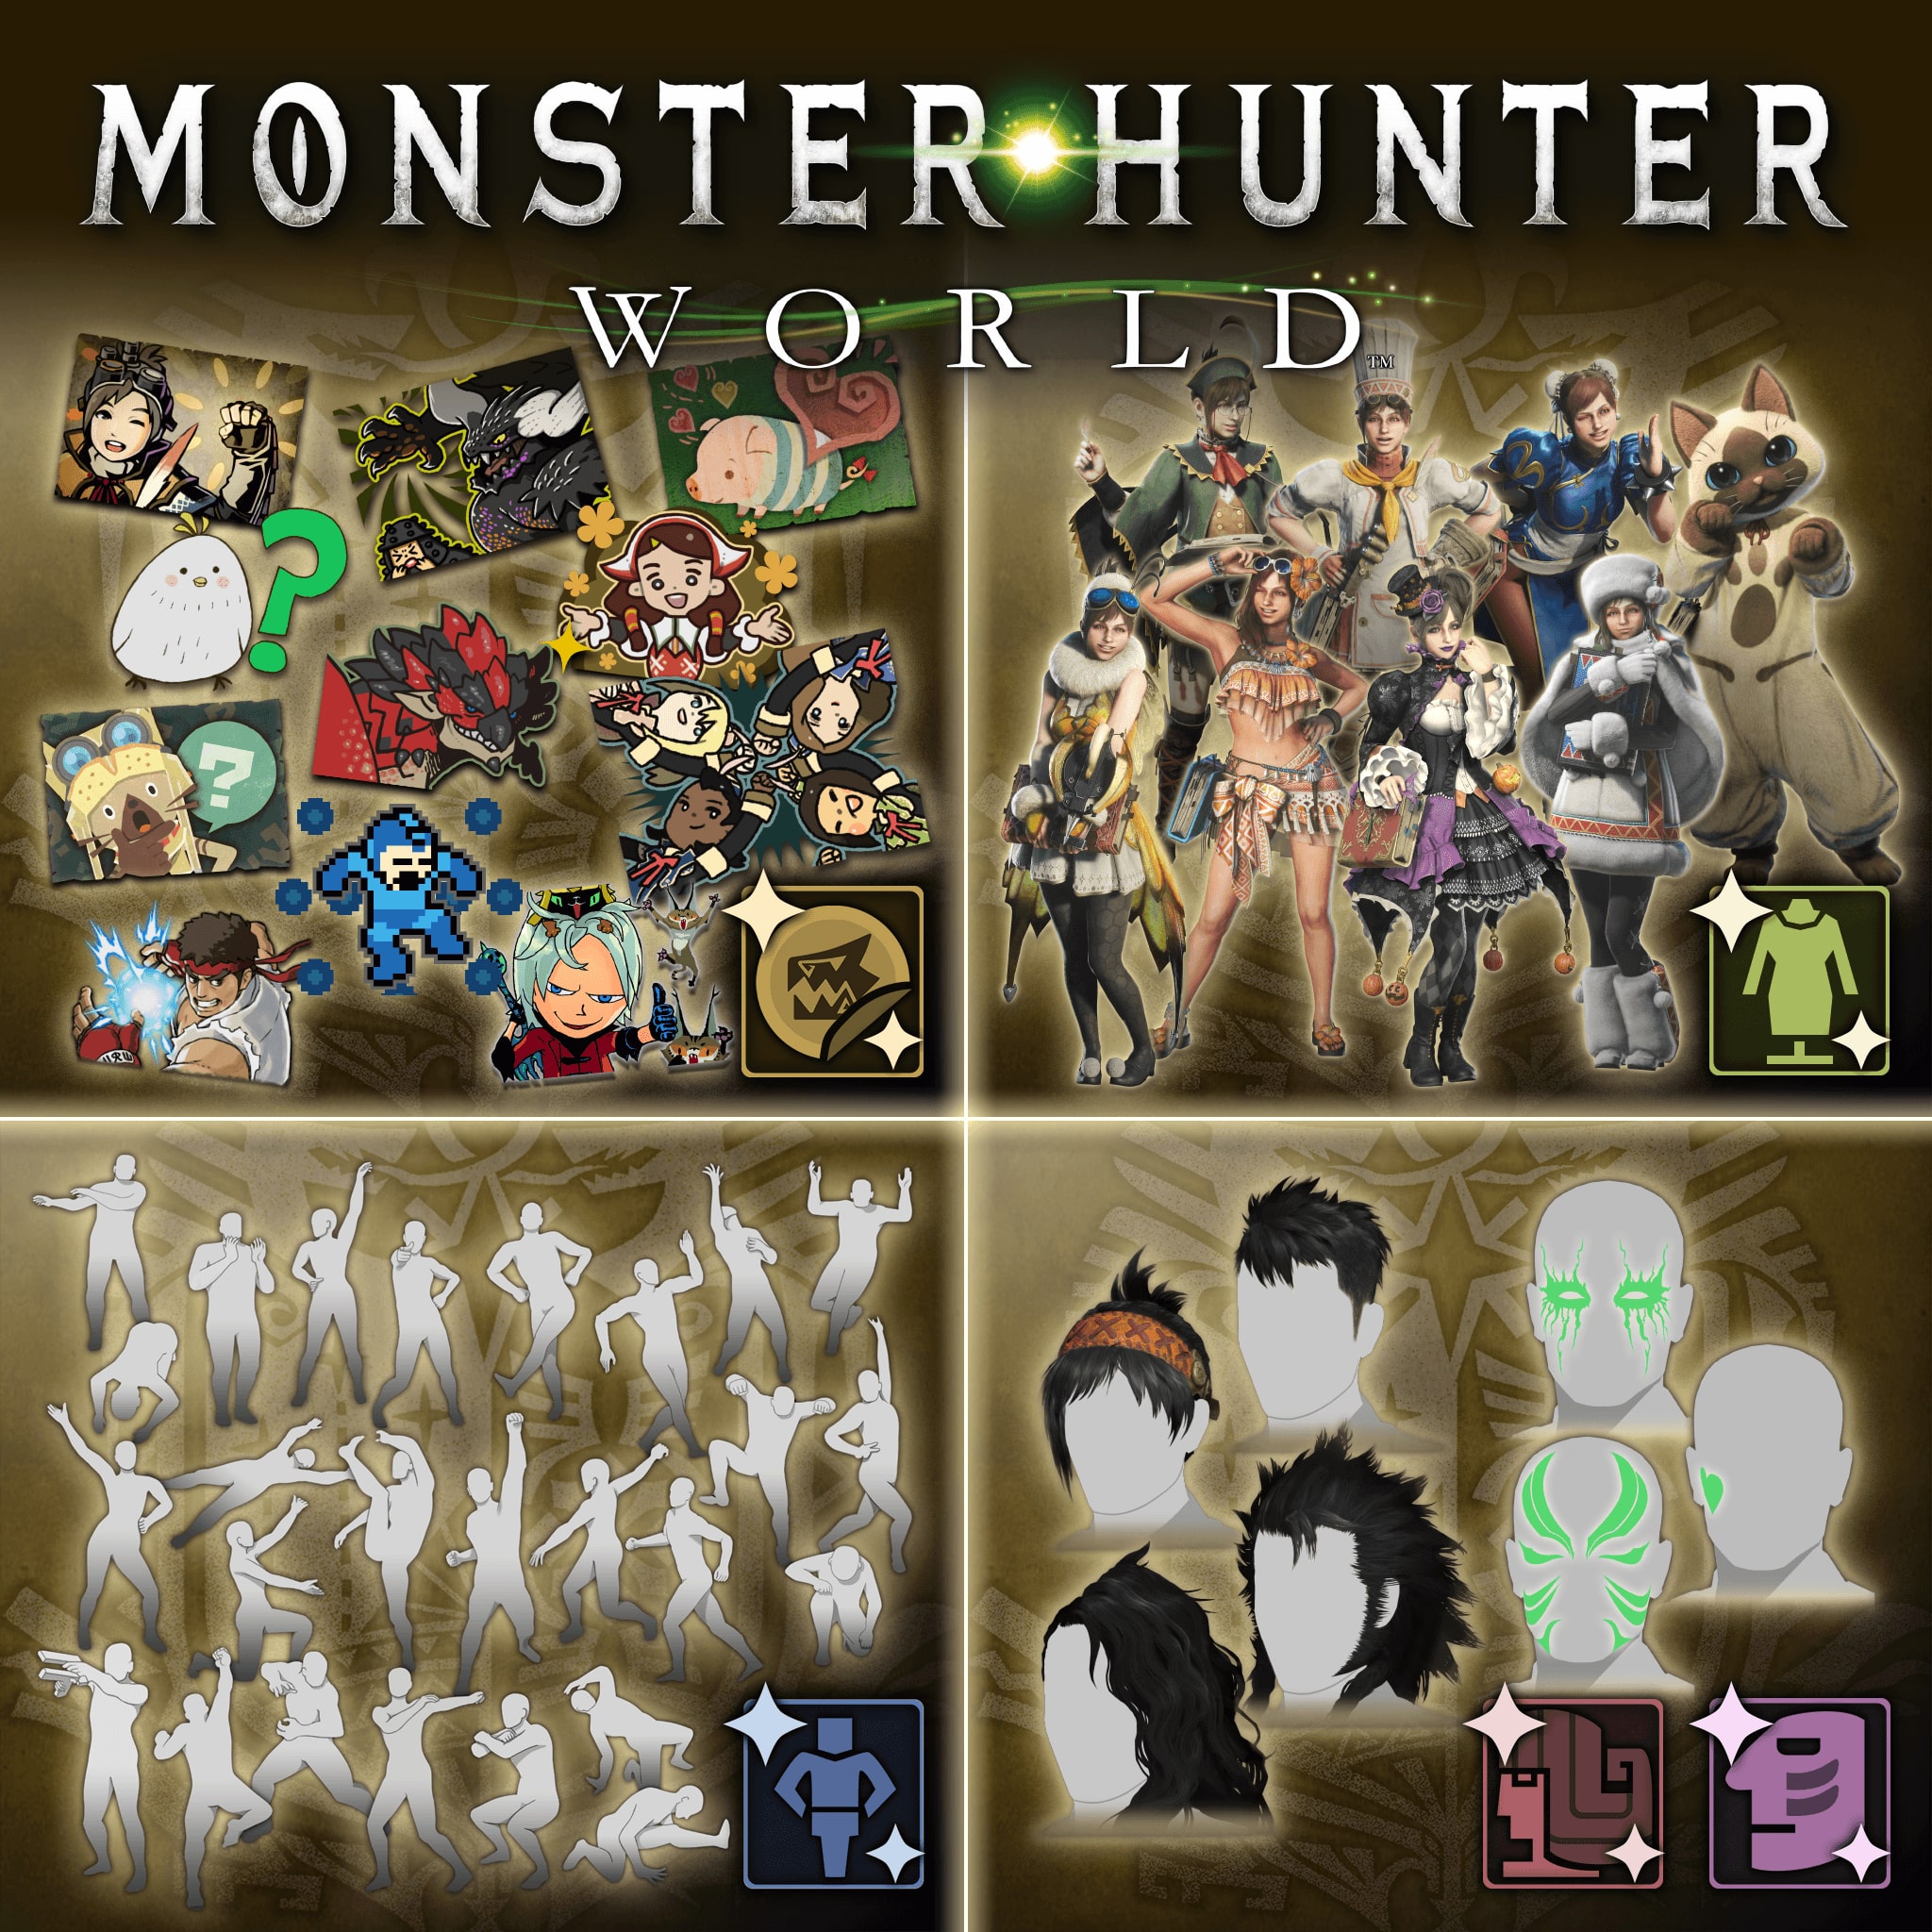 monster hunter ps4 digital